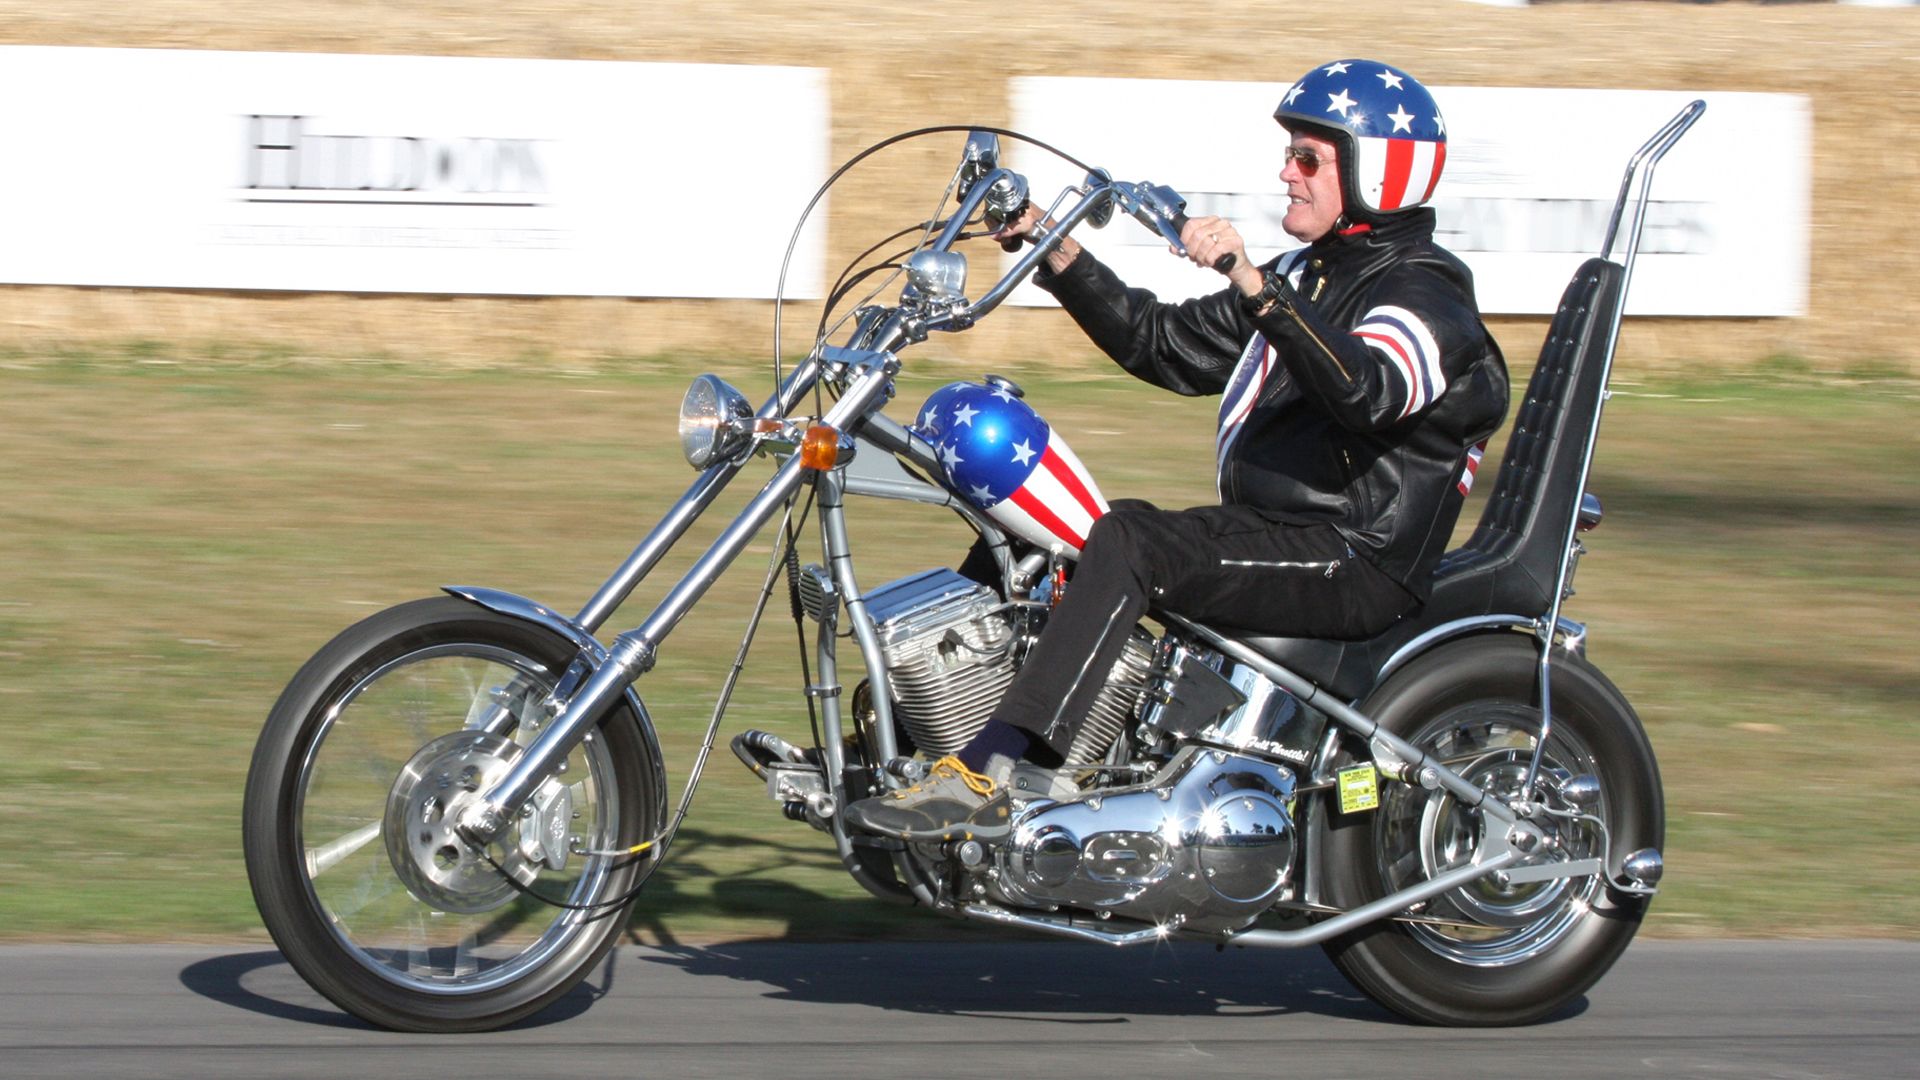 Famous Peter Fonda riding famous 1959 Harley-Davidson Captain America Chopper motorcycle